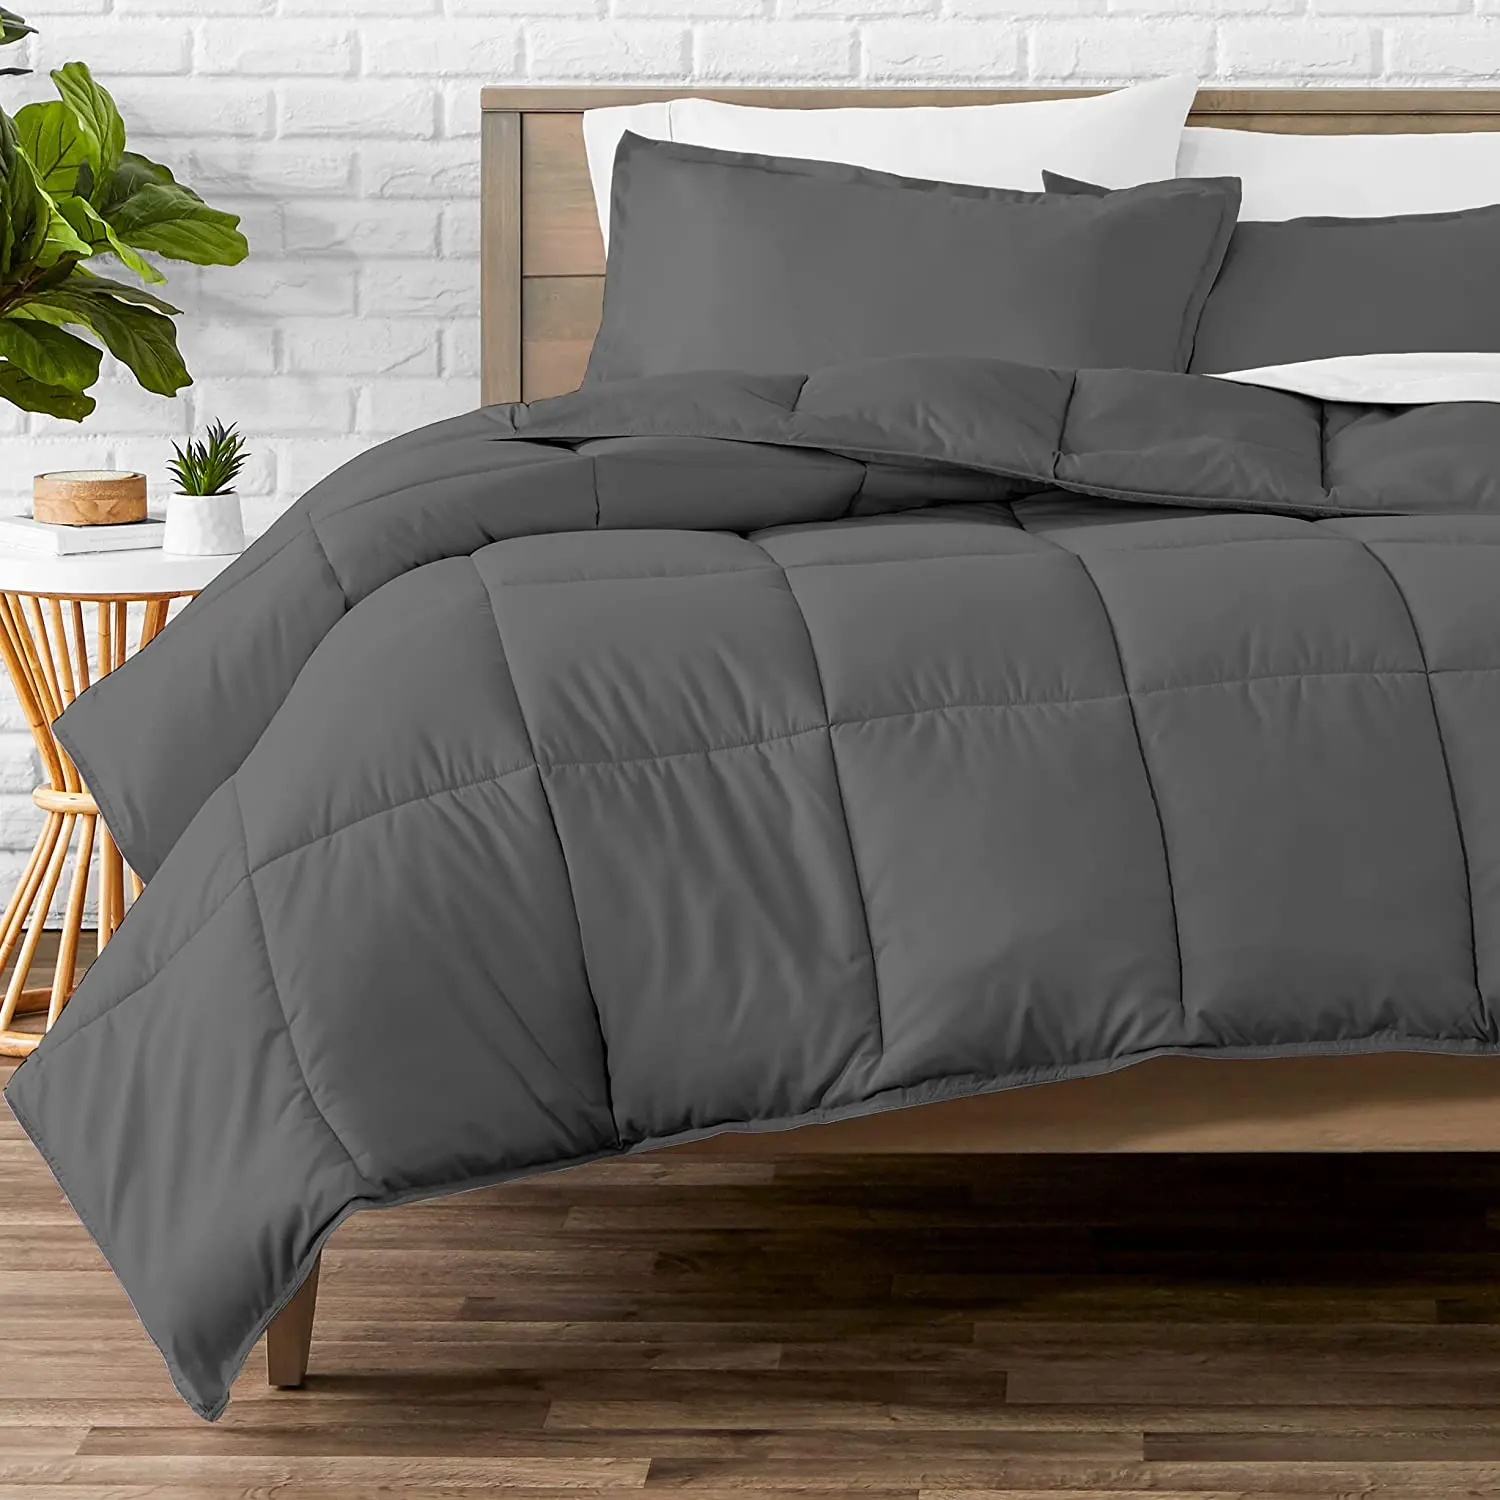 Best Quality Bedding Microfiber Comforter Quilt 3pcs All Season Light Feather Down Alternative Soft Bedspread Duvet Bedding Set